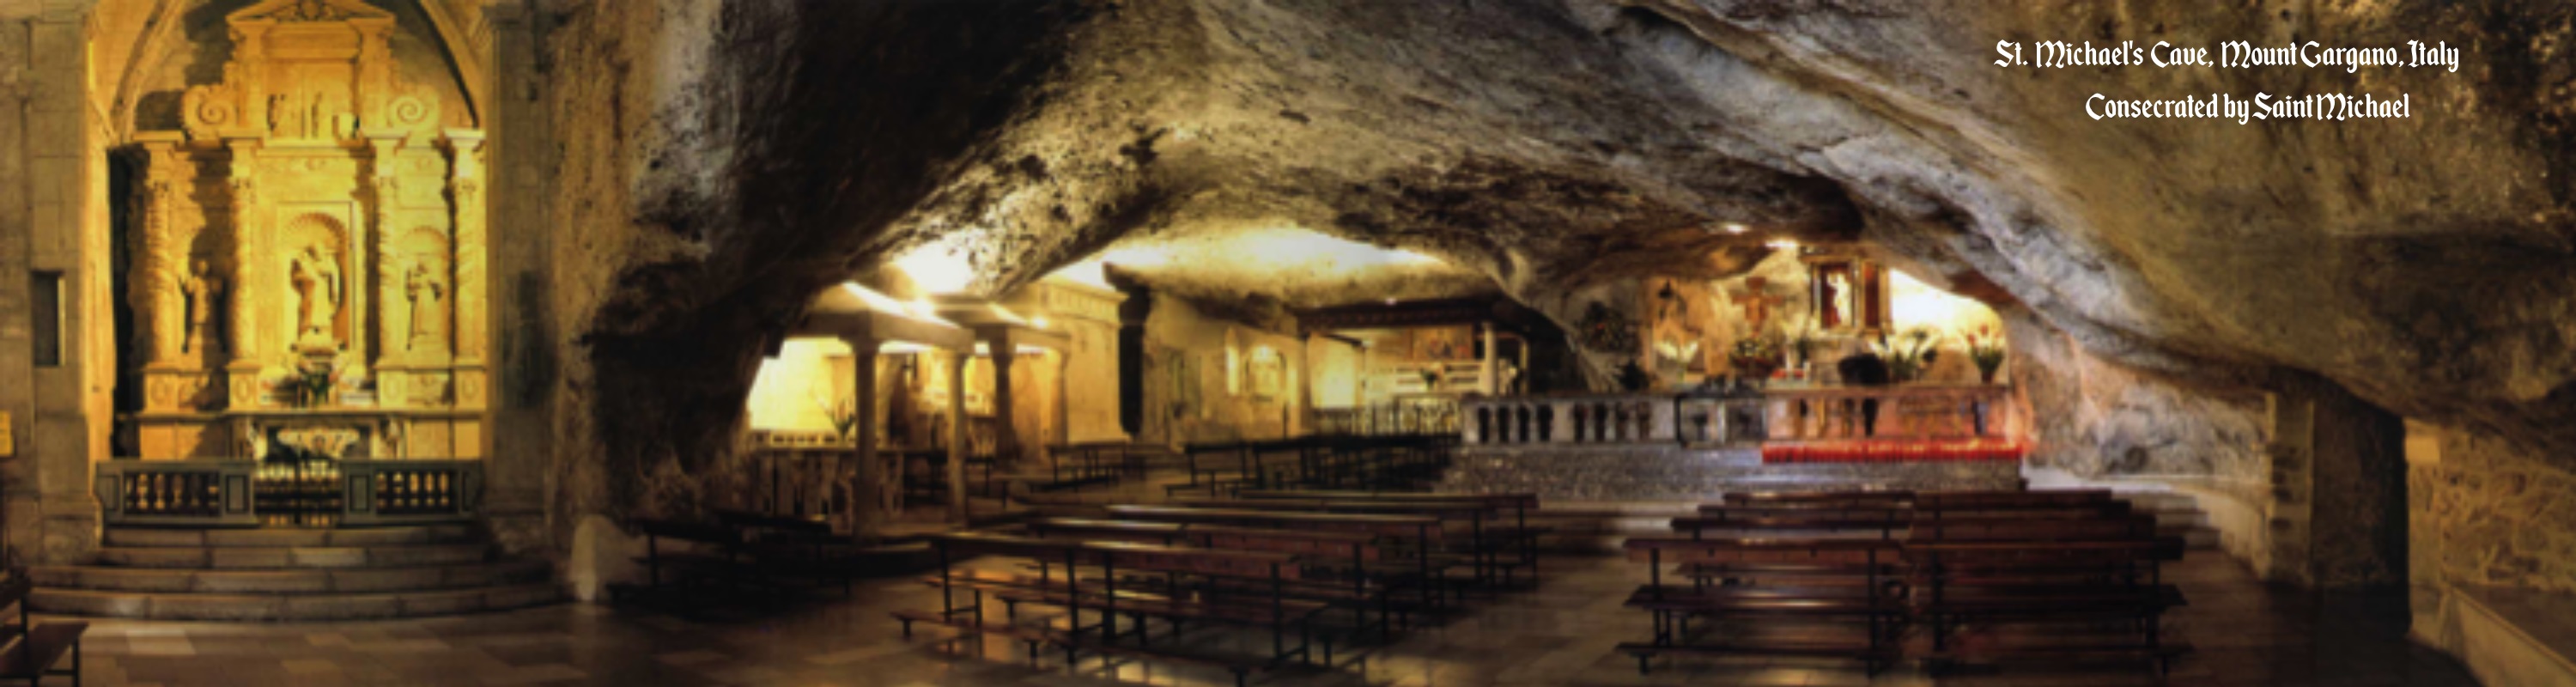 St. Michael's Cave, Gargano, Italy